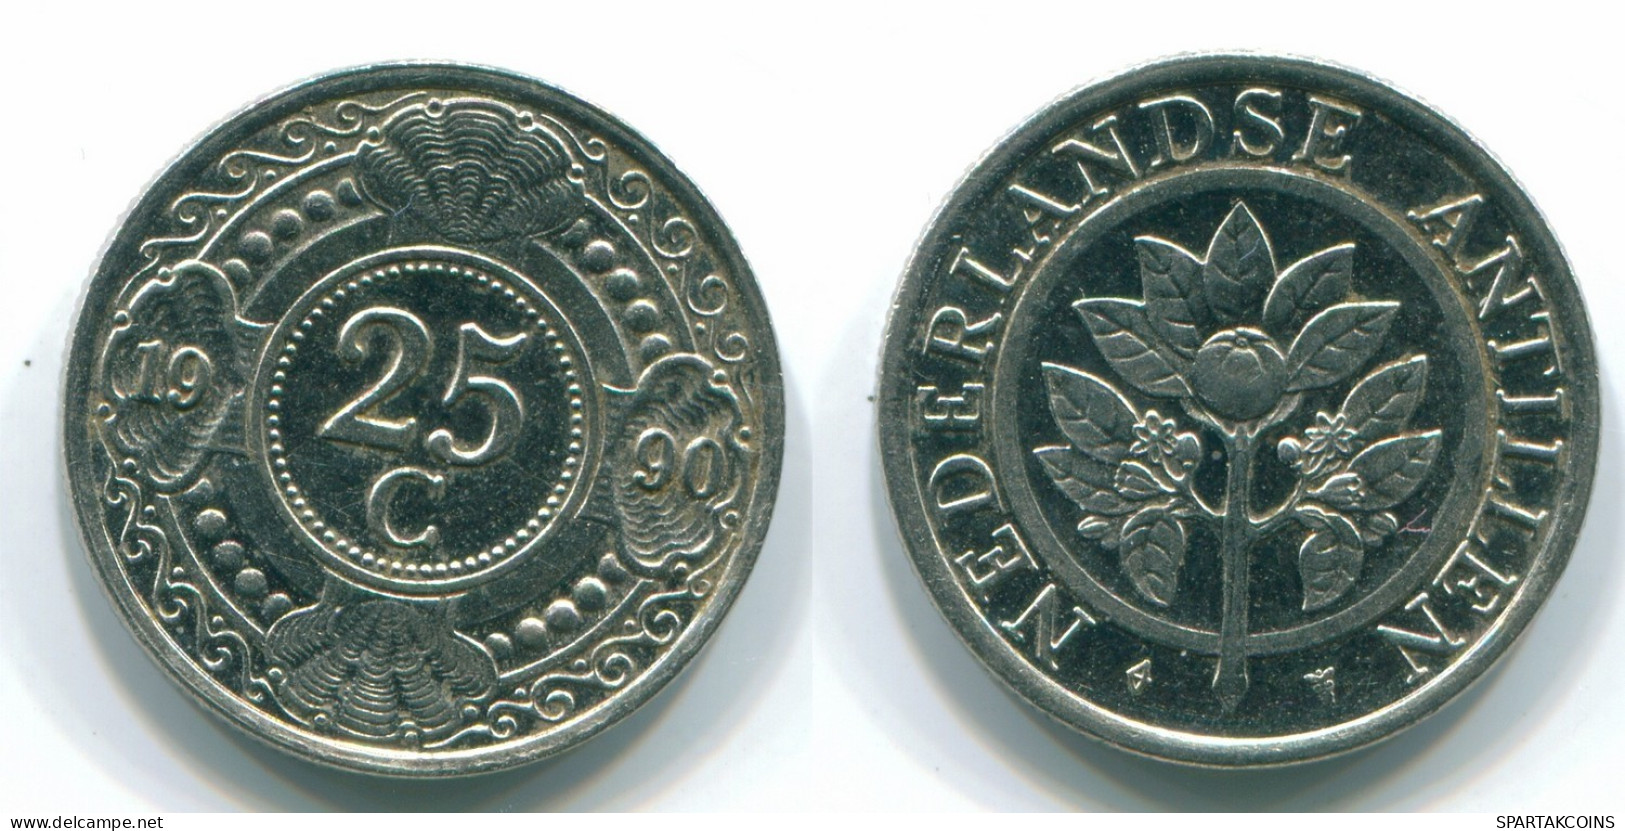 25 CENTS 1990 NIEDERLÄNDISCHE ANTILLEN Nickel Koloniale Münze #S11264.D.A - Netherlands Antilles